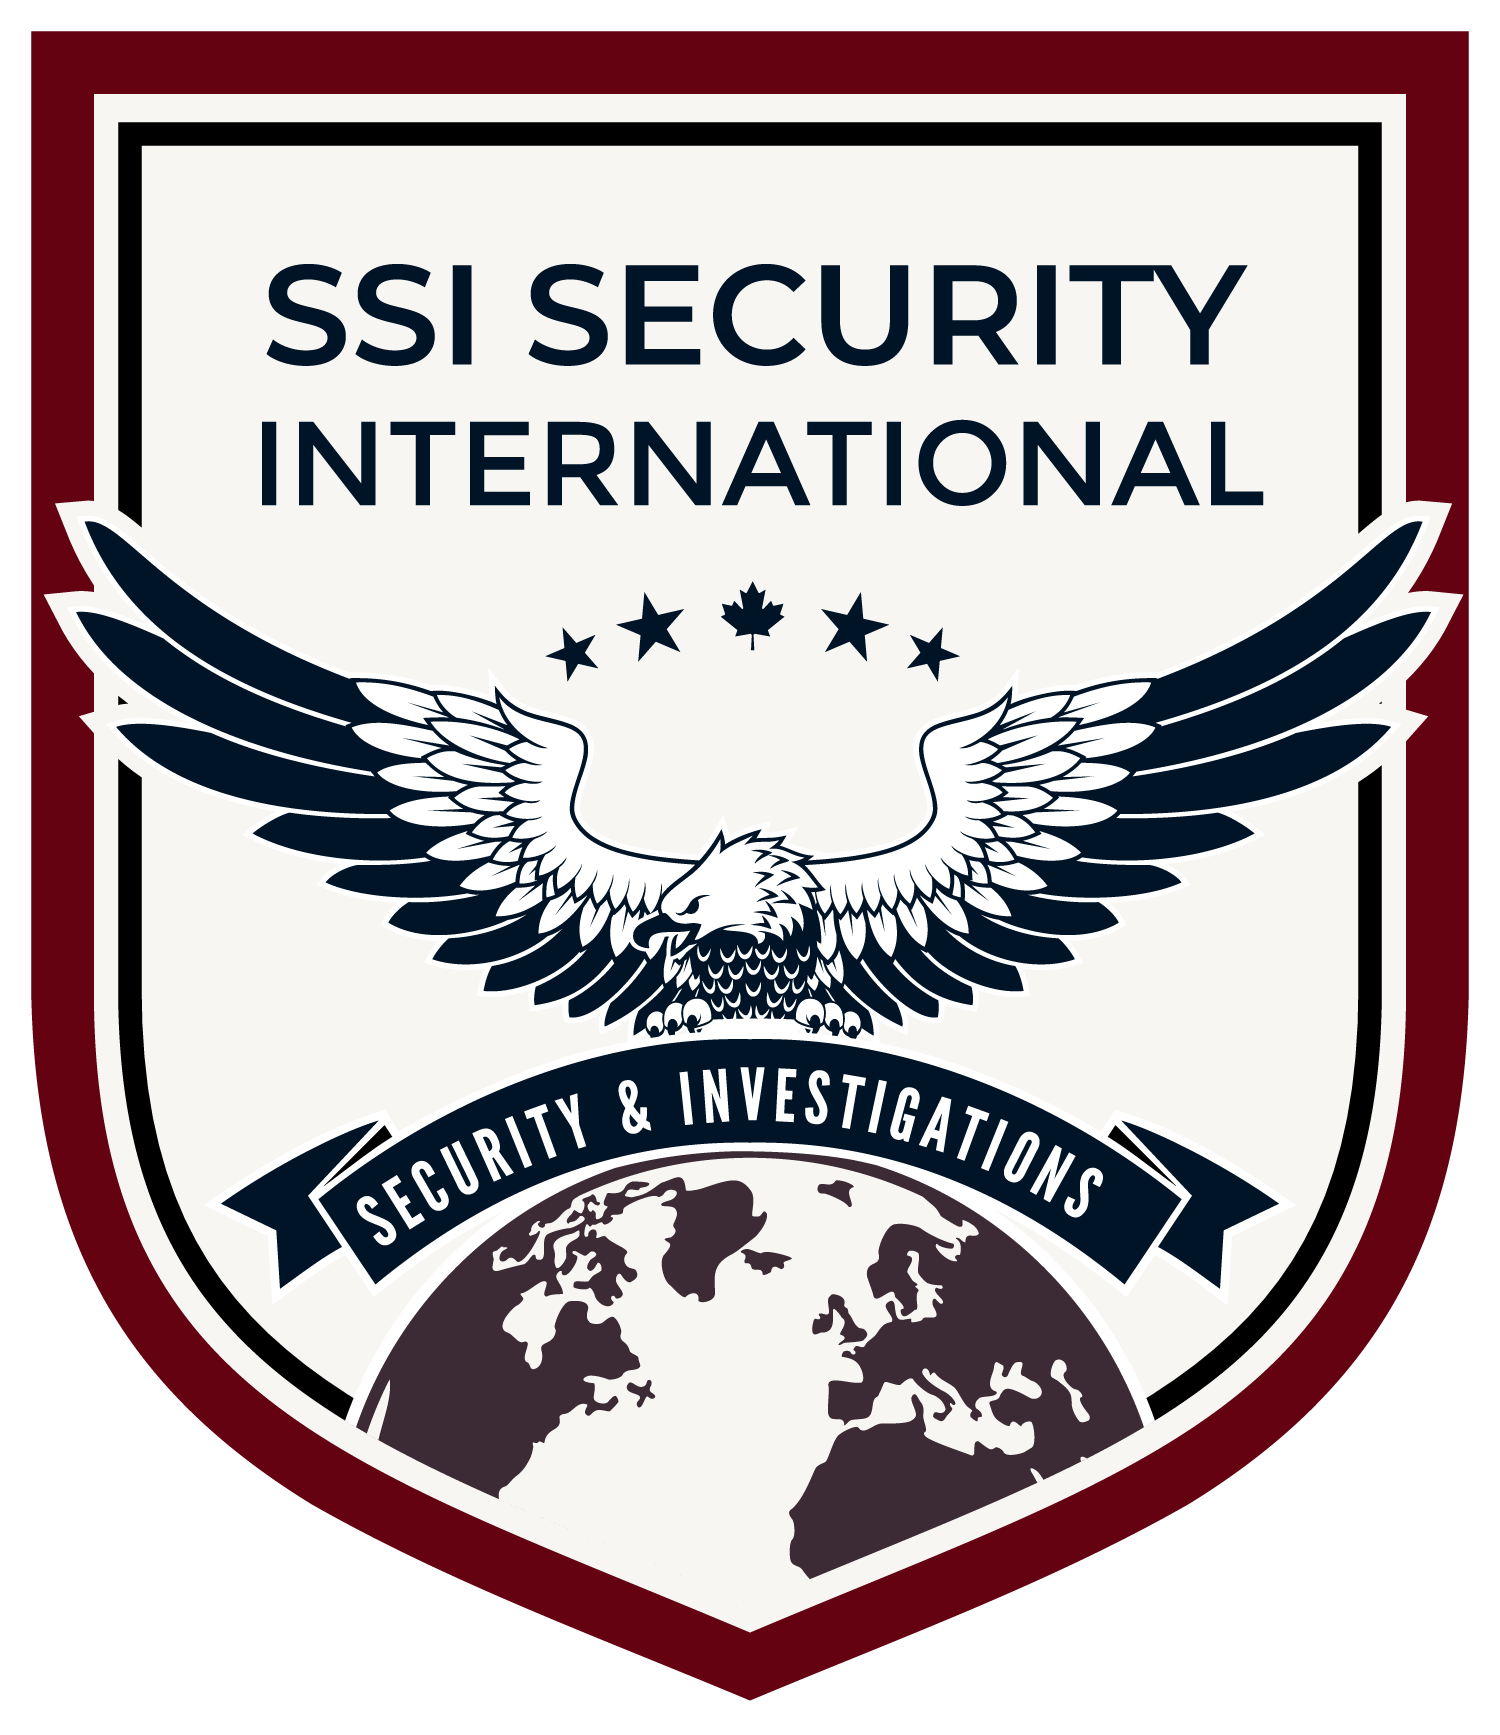 SSI Security International